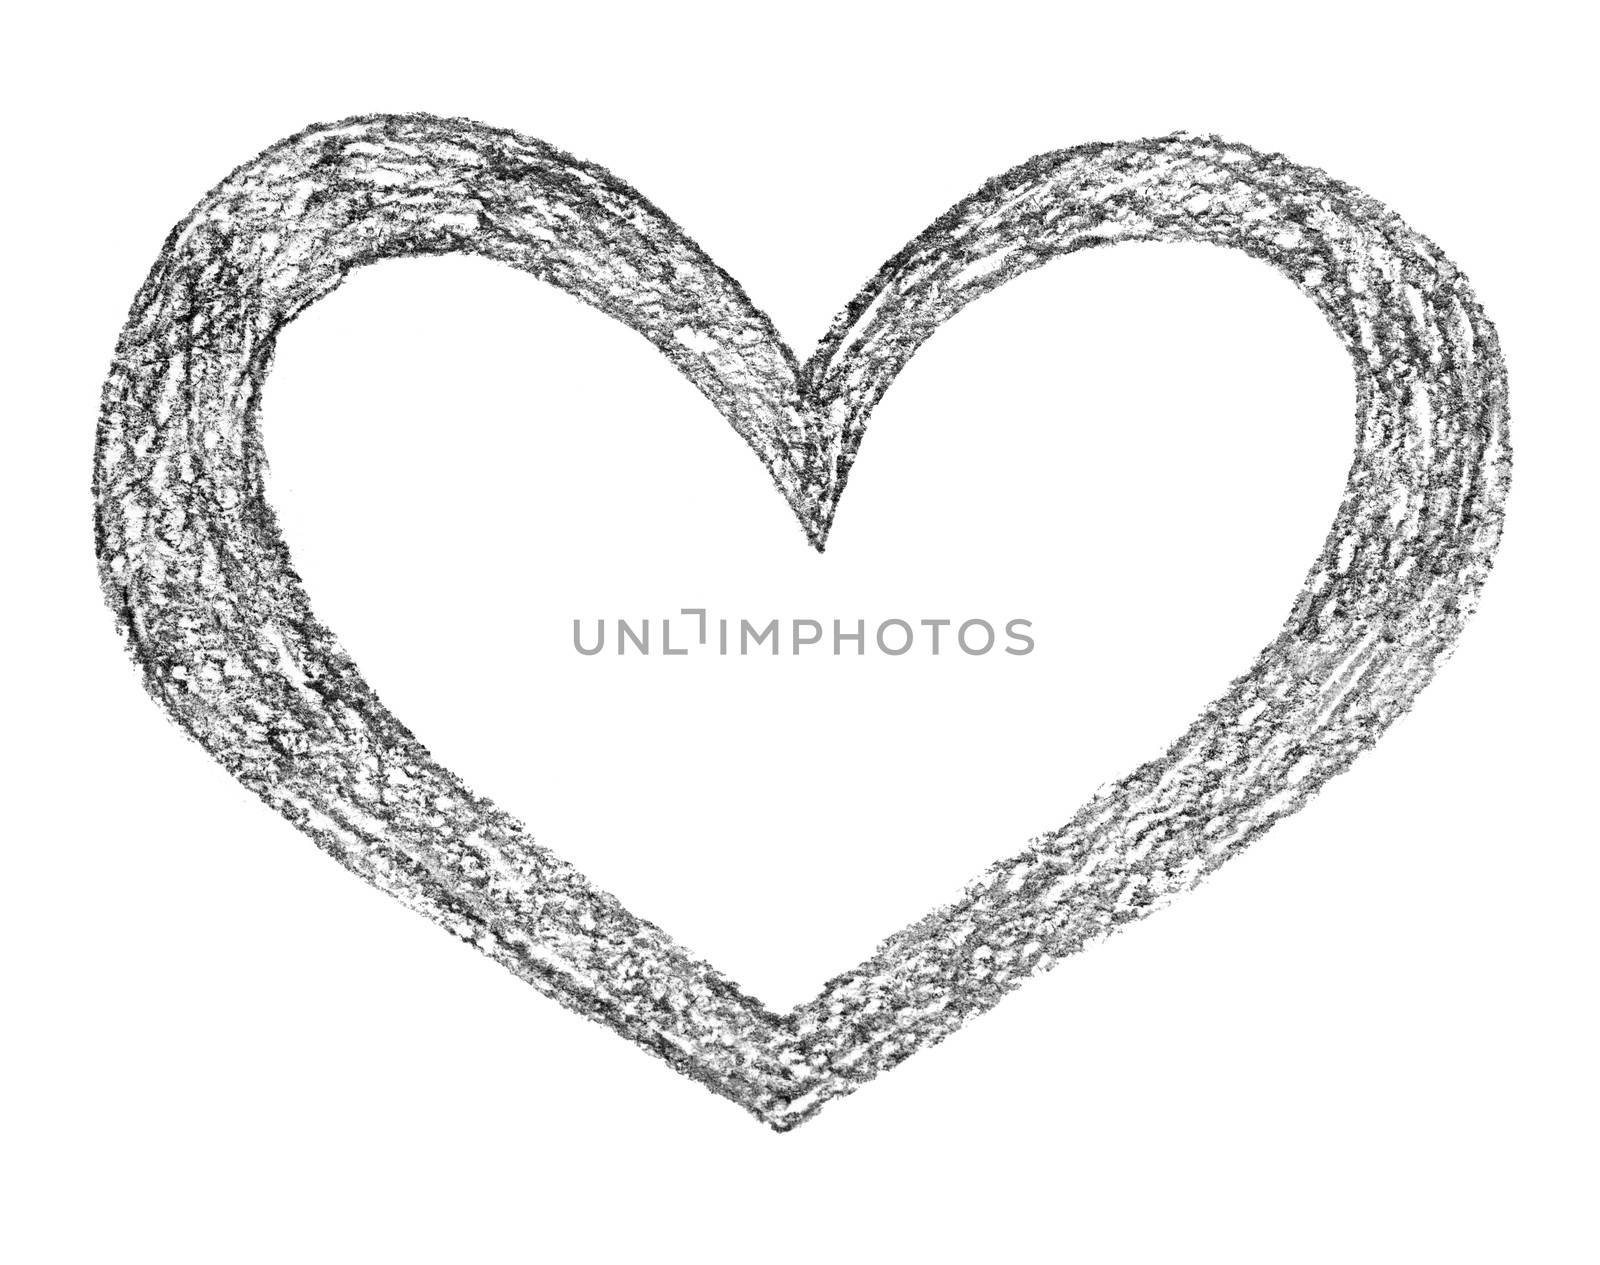 Hand drawn, crayon heart shape by anelina